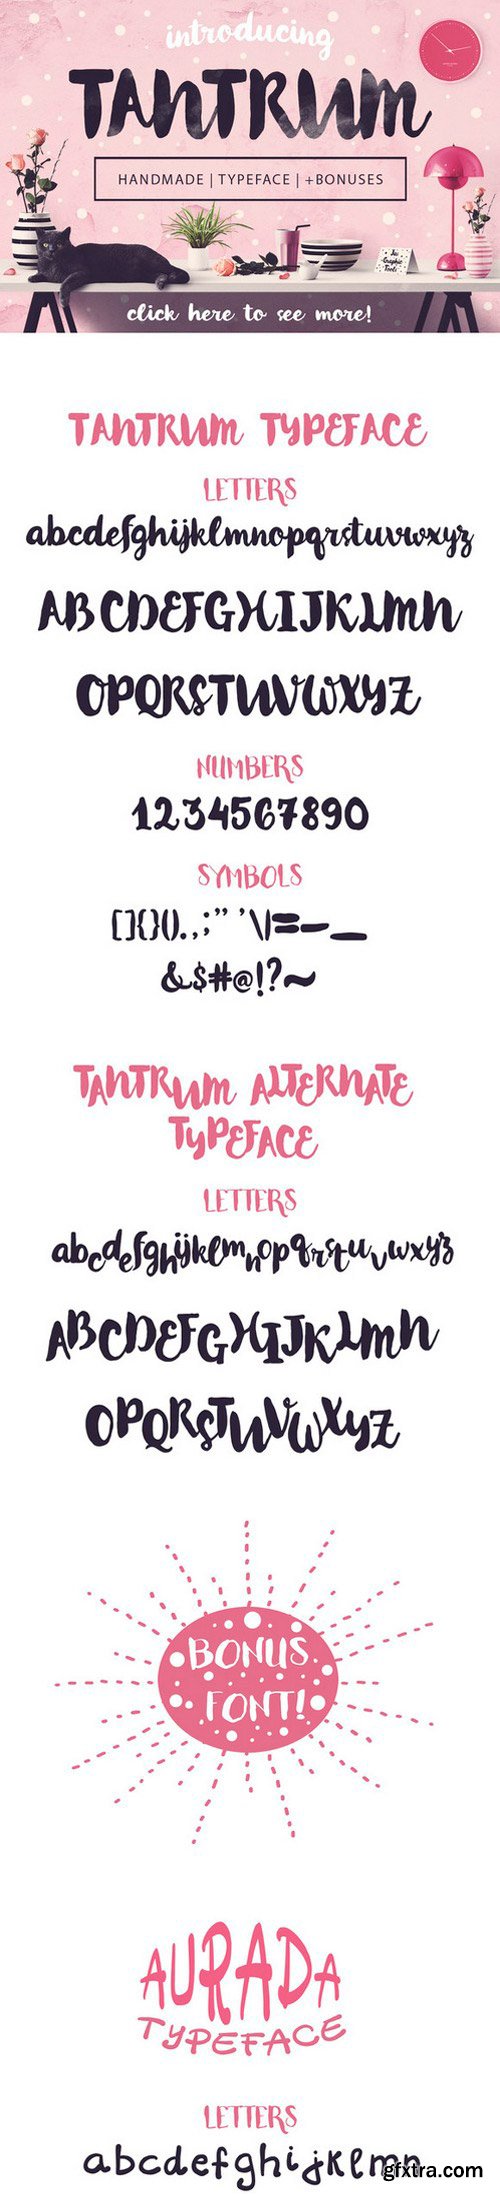 CM - Tantrum Typeface + Bonus Artsy Kit! 324437